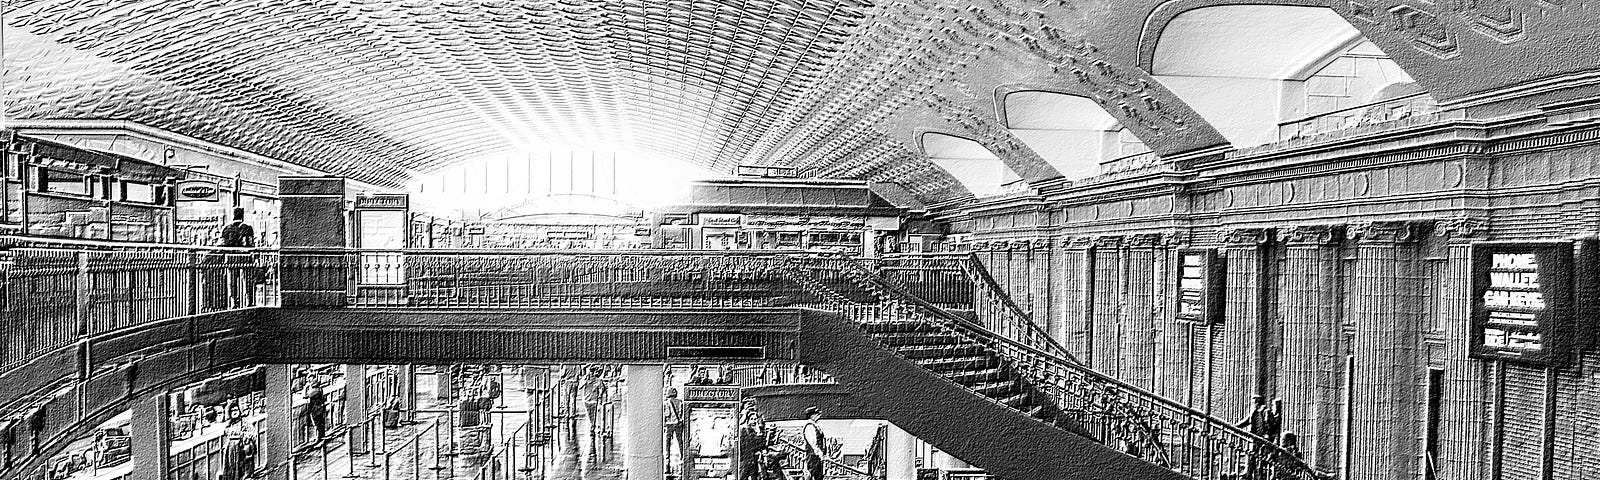 Photo Manipulation of Union Station, DC